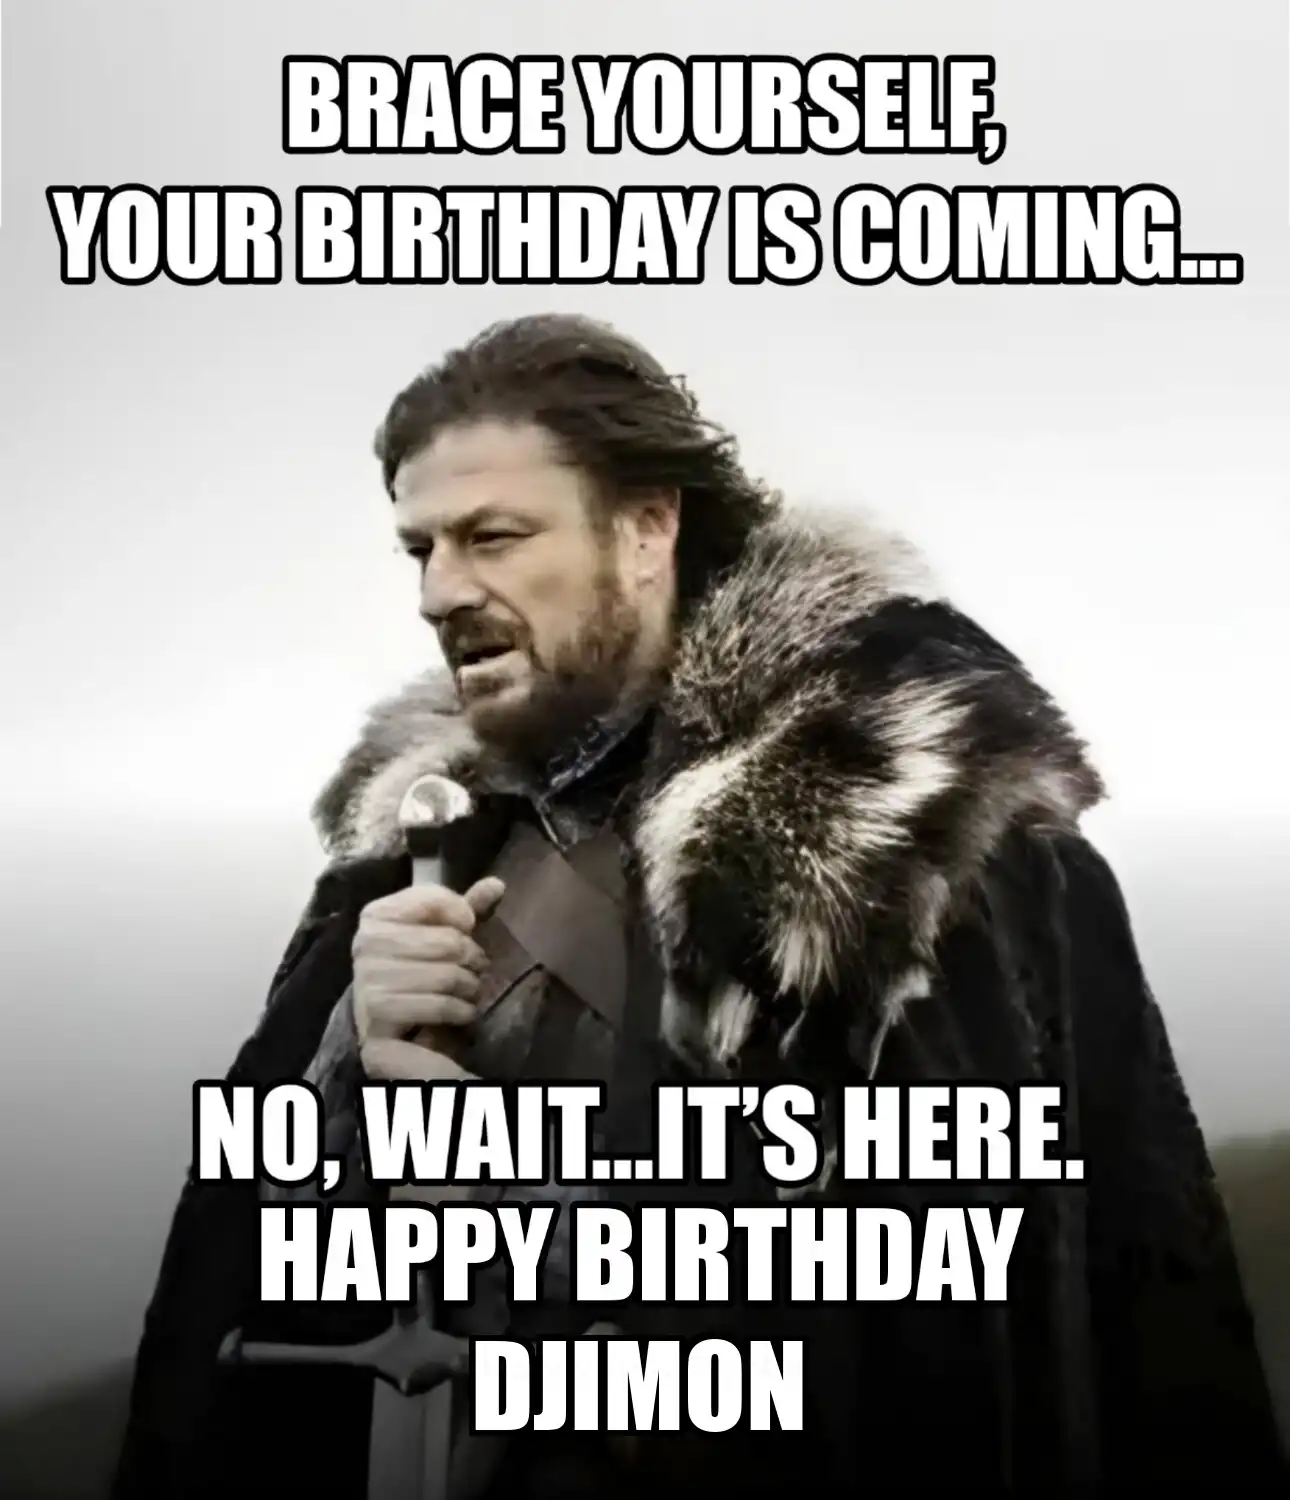 Happy Birthday Djimon Brace Yourself Your Birthday Is Coming Meme